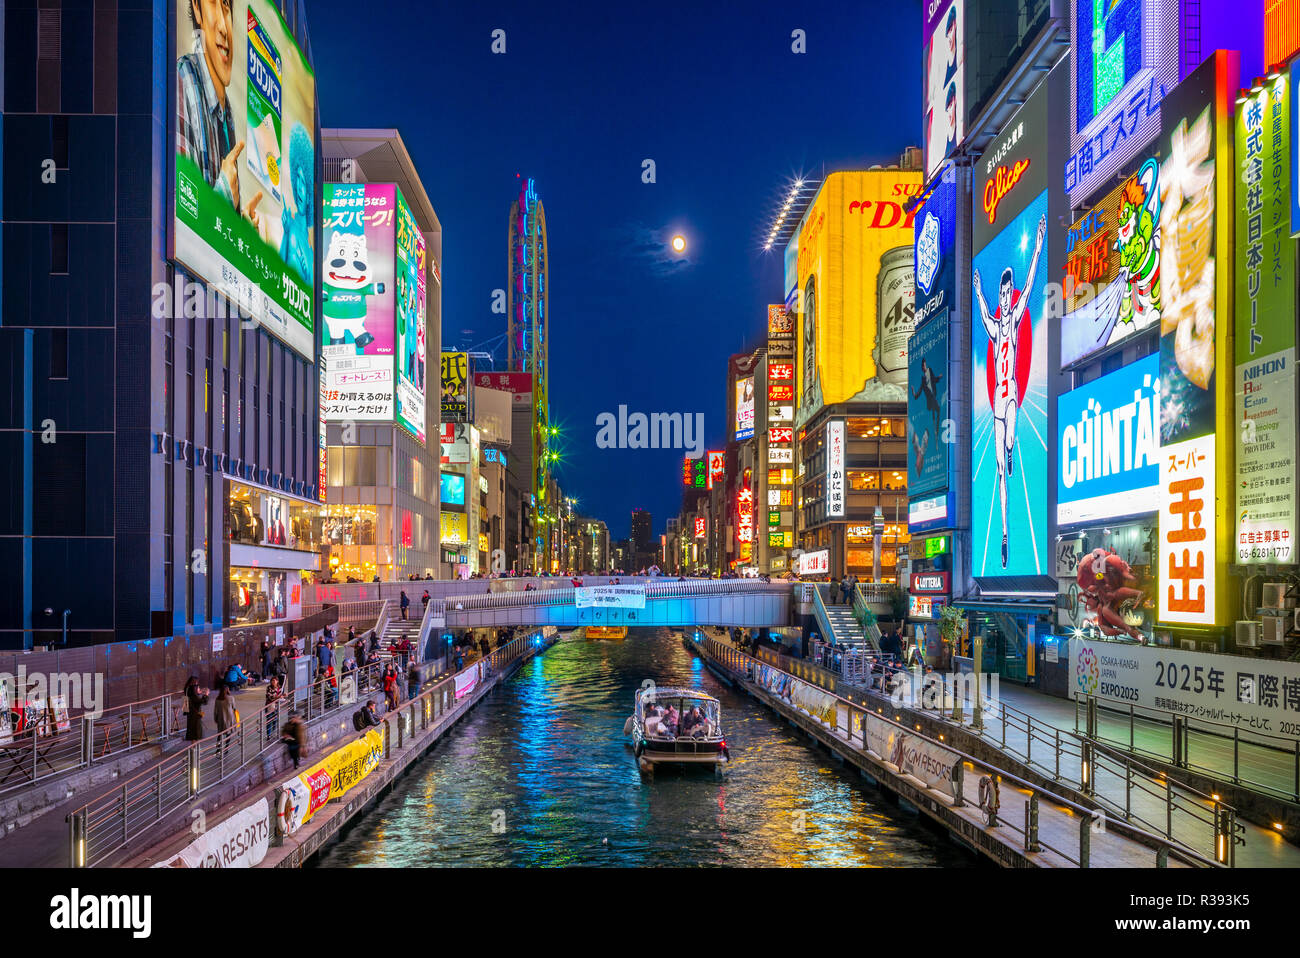 Osaka, Japan - November 21, 2018: night view of dotonbori, a principal tourist destinations in Osaka along the Dotonbori canal from Dotonboribashi Bri Stock Photo